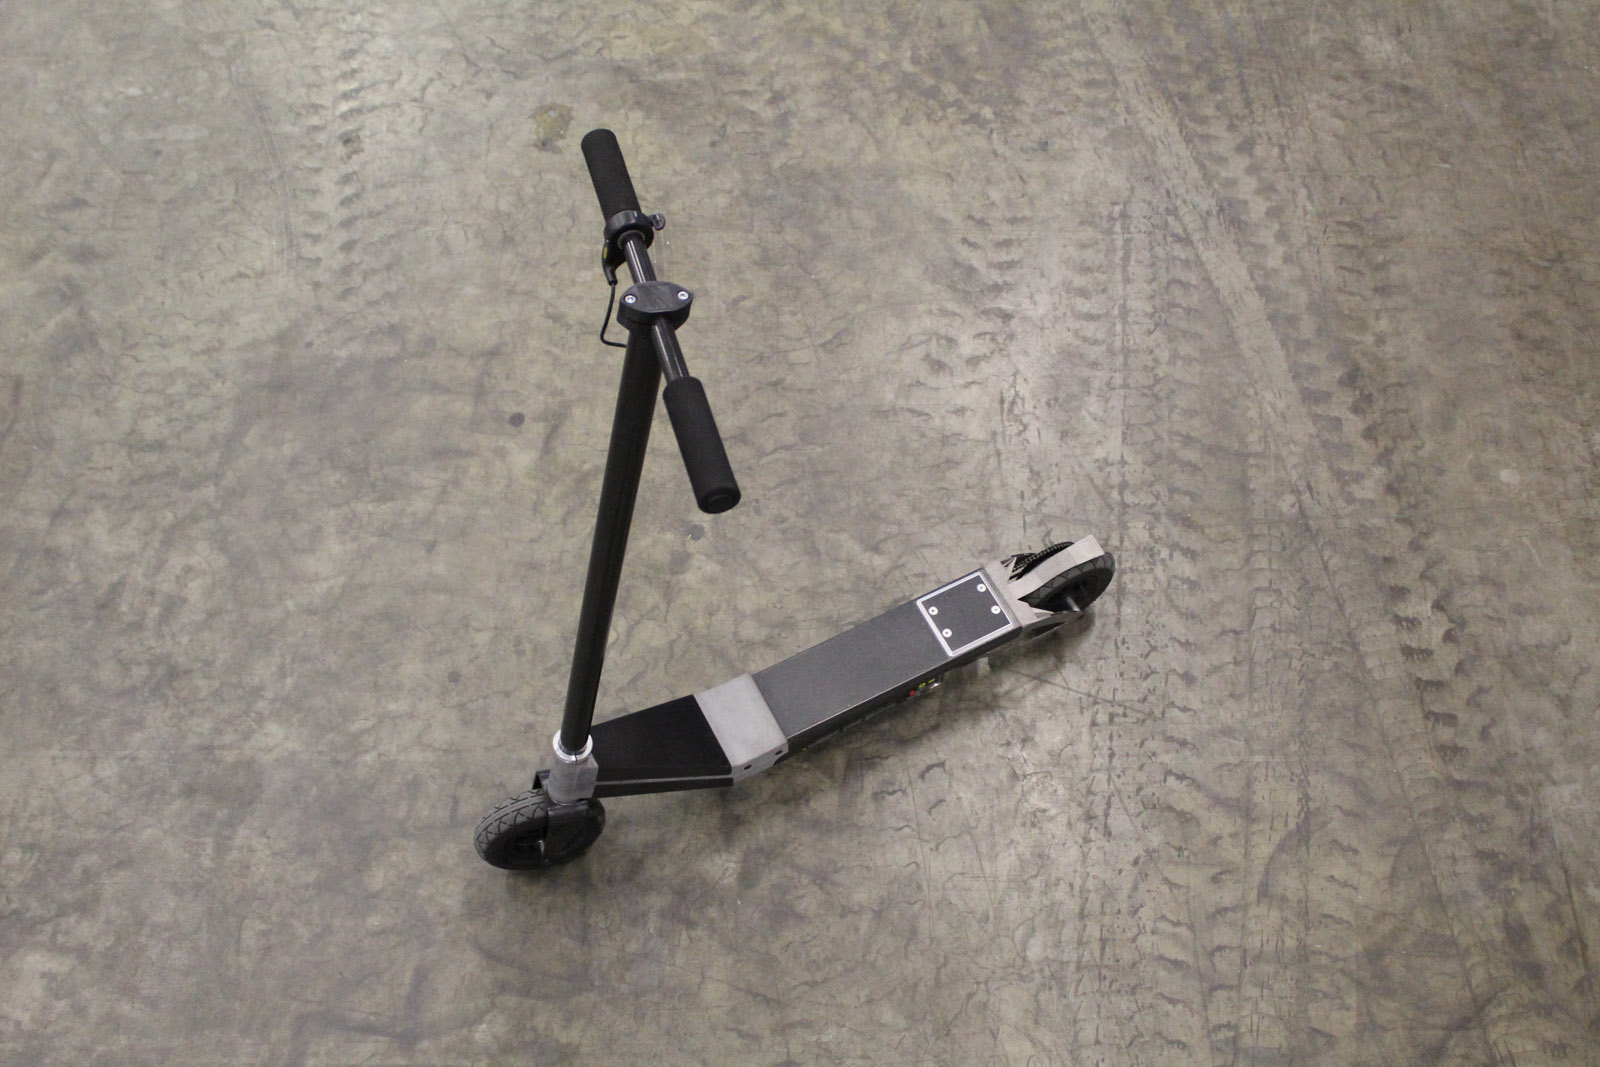 Hybrid metal and carbon fiber reinforced plastic e-scooter